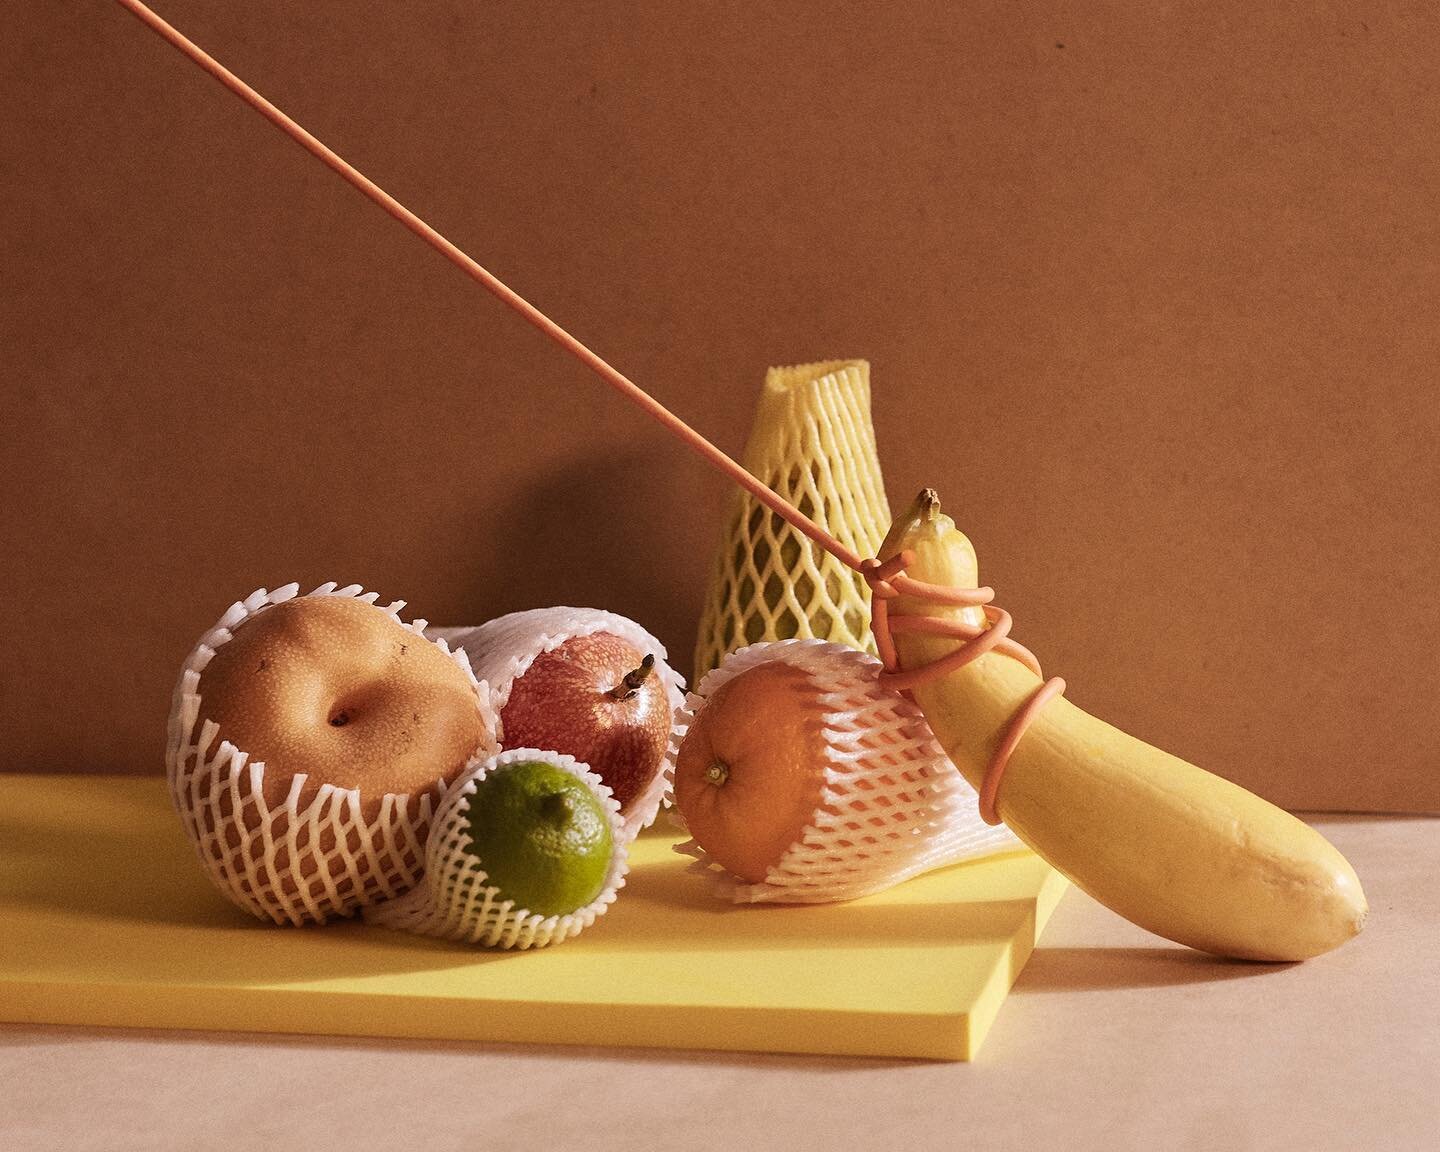 Fruit Nets.
Vogue Italia 
#RicardoRiveraPhoto

Photographer &amp; Creative Direction @ricardo_rivera 
Set design @ceciliaelguero